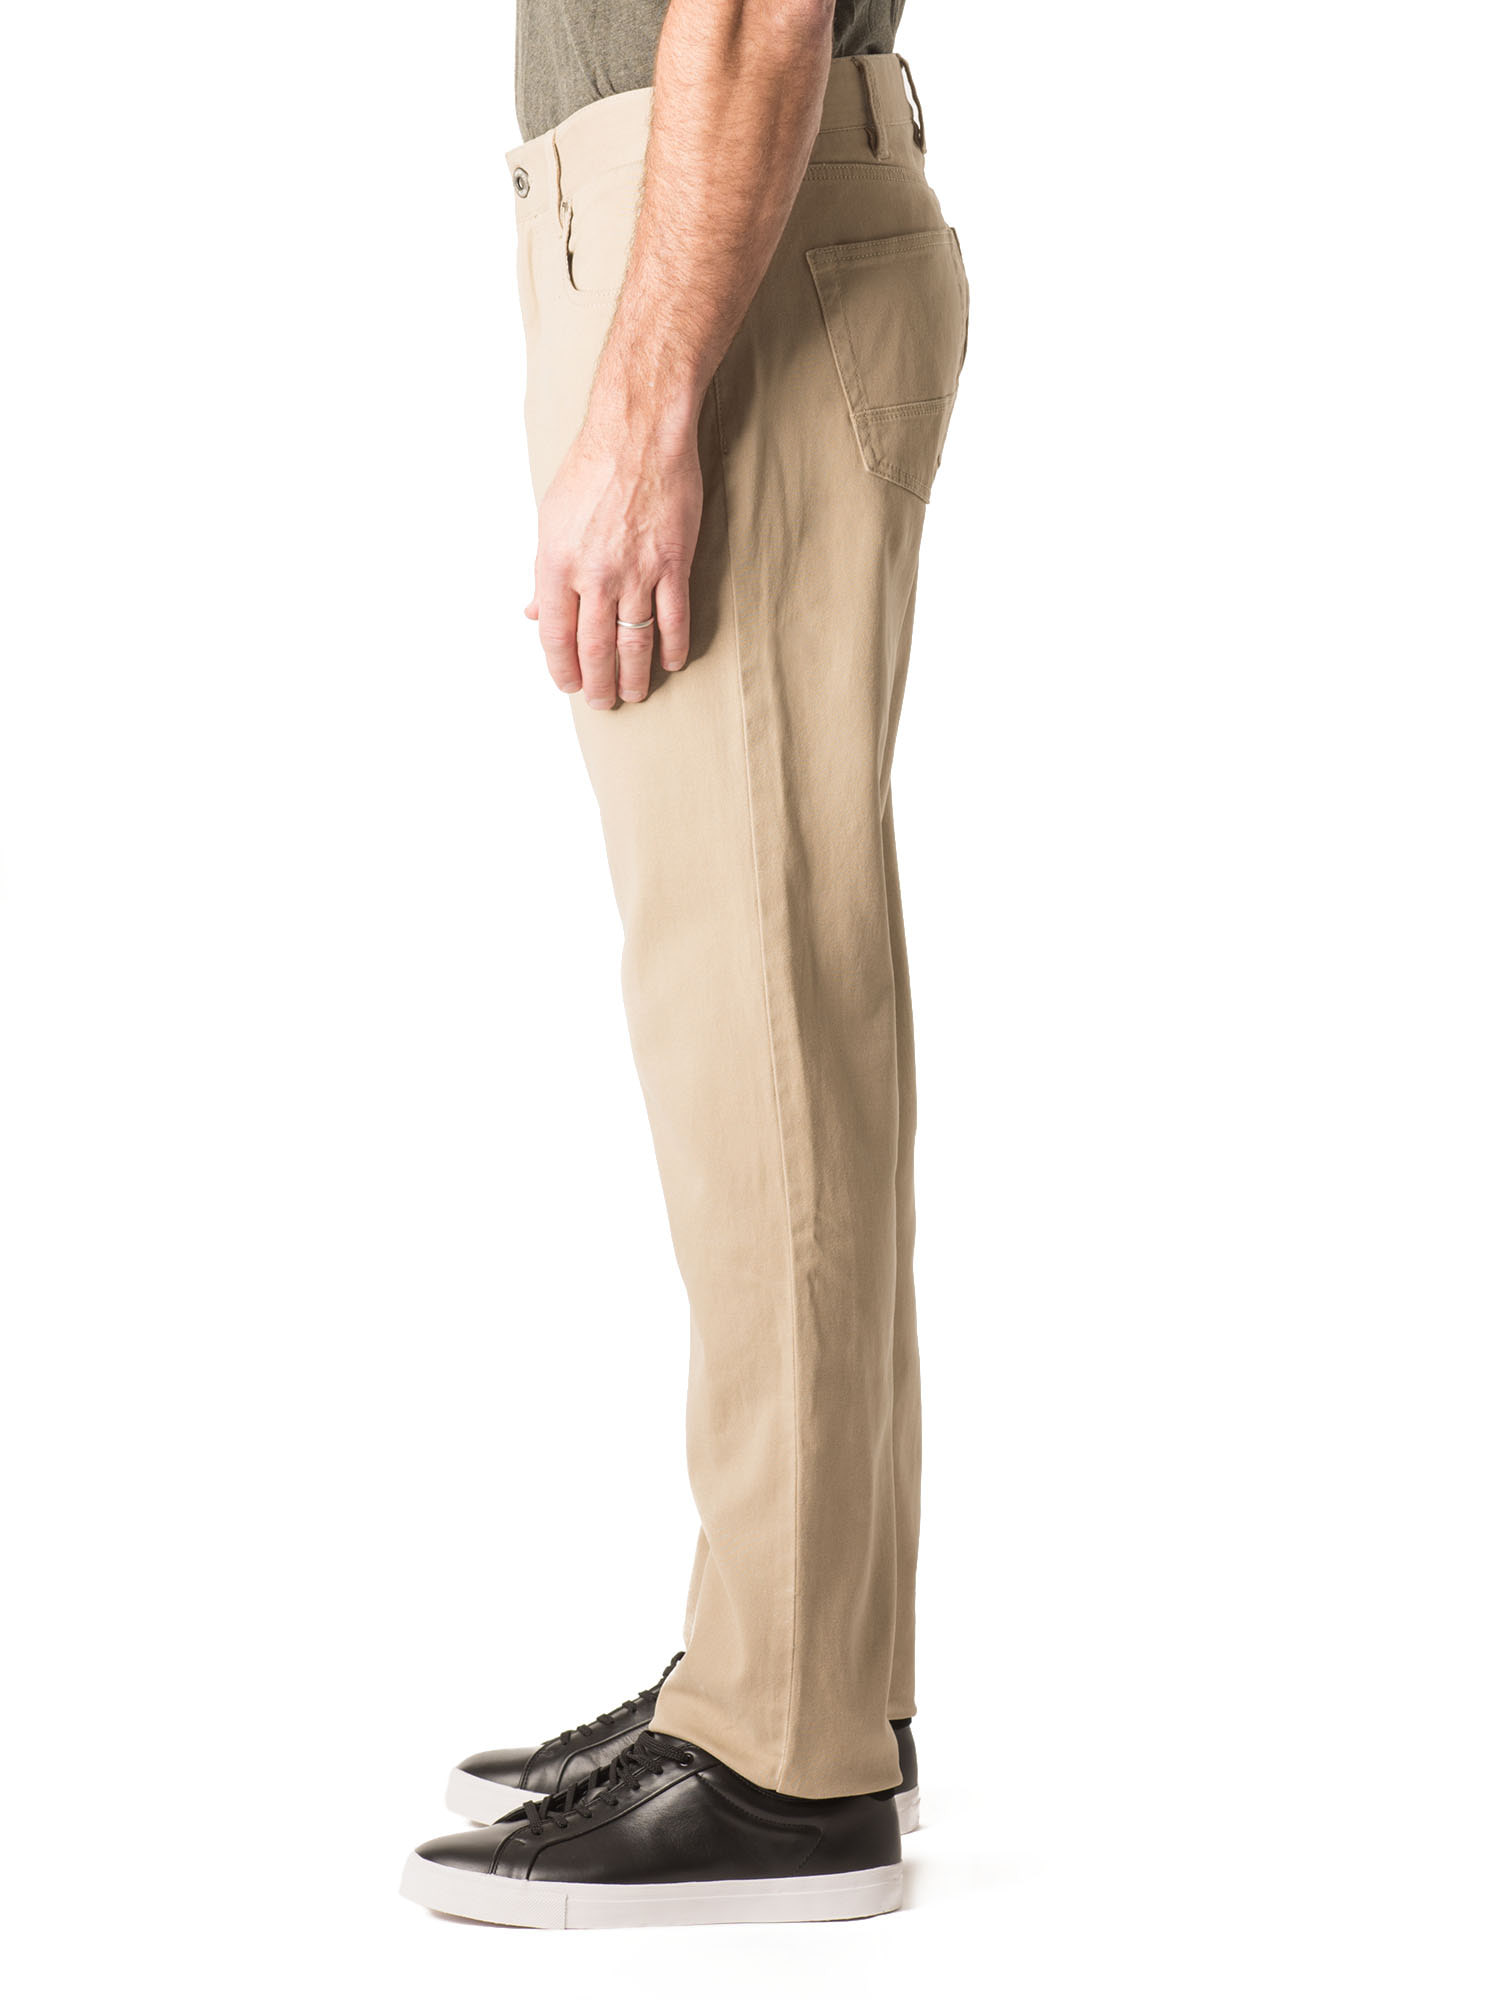 PATRIOT” 5 Pocket Stretch Twill Pant with Flex Inner waistband